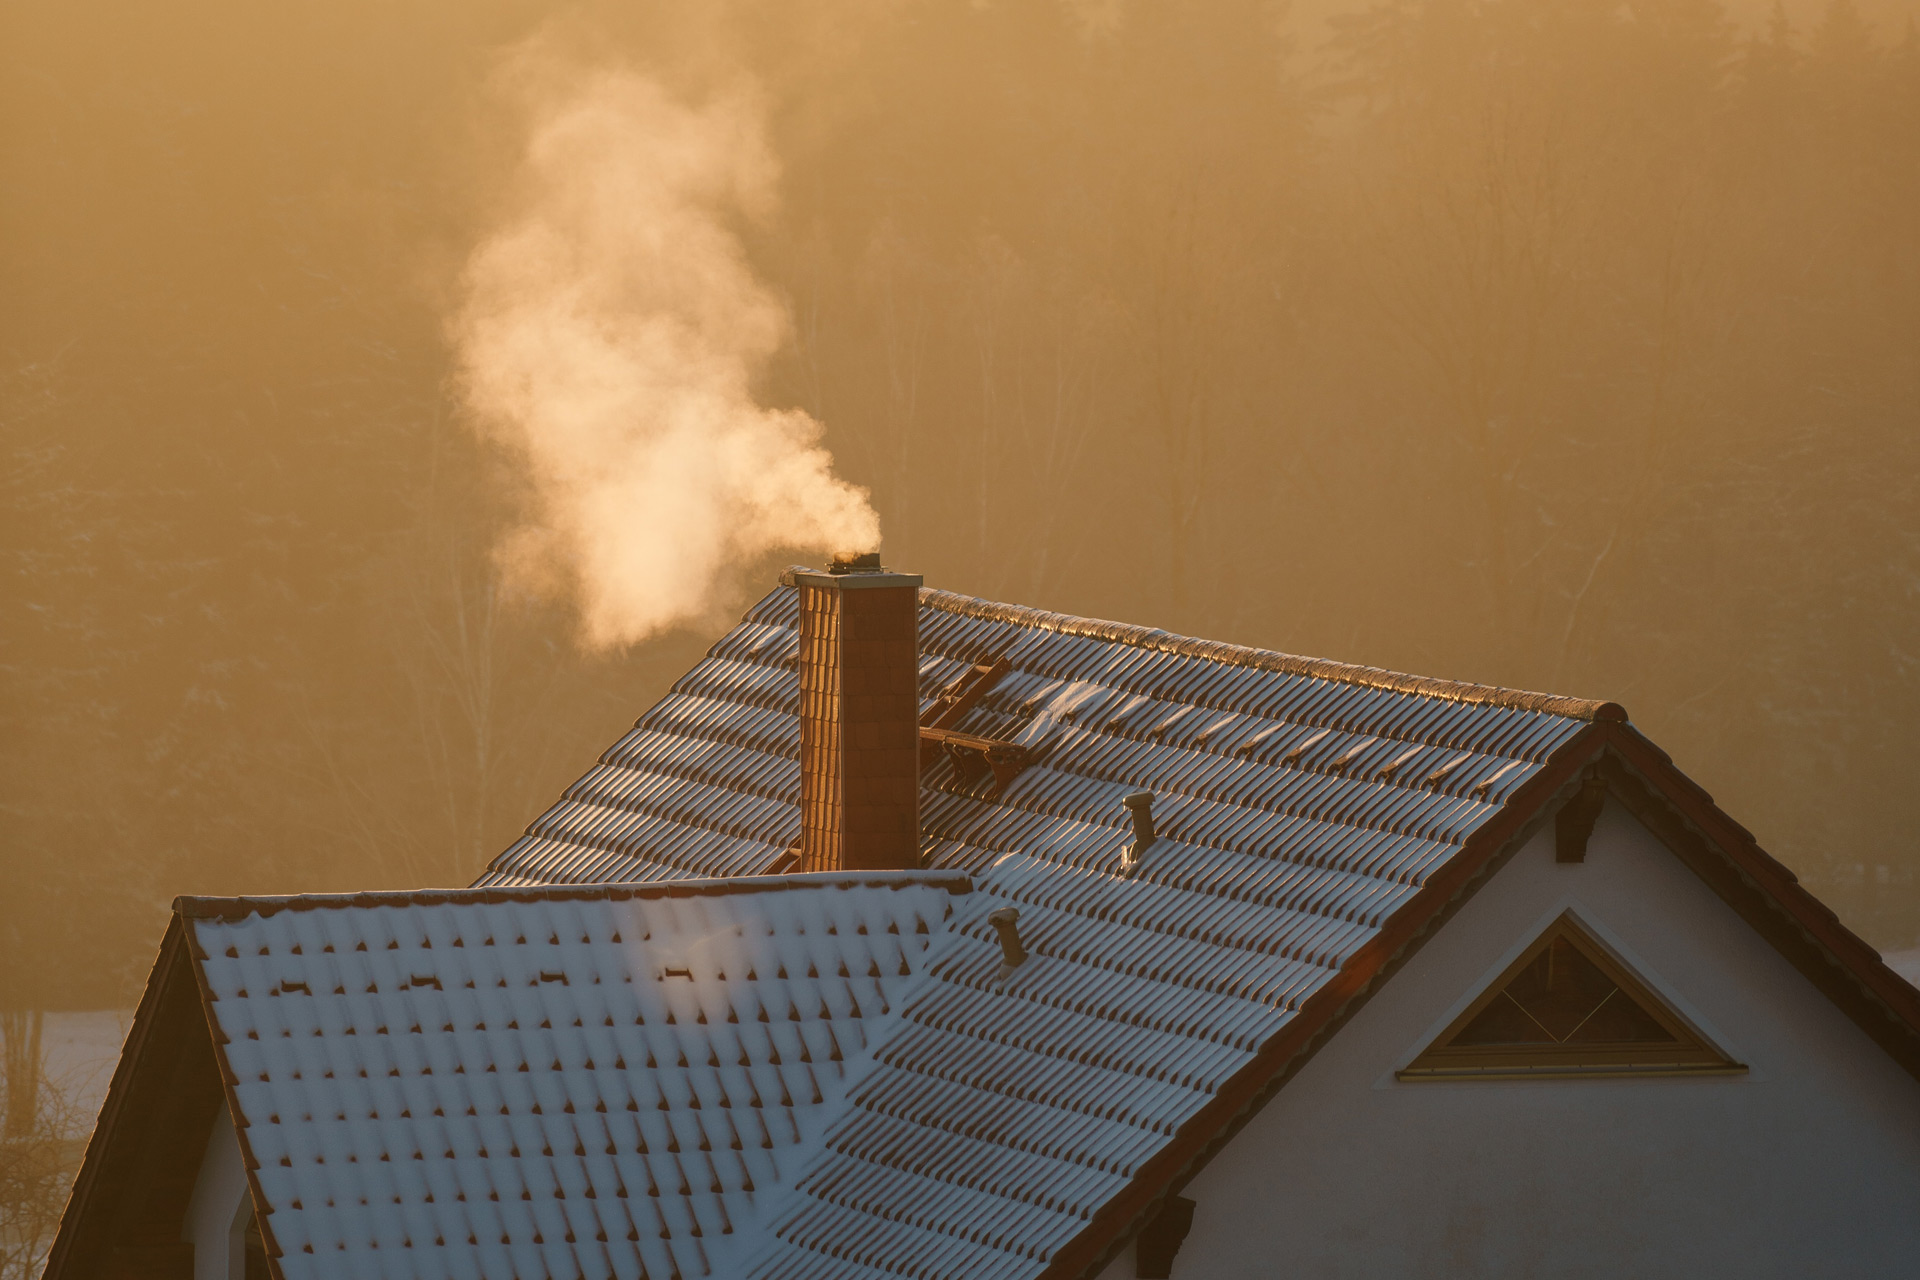 Smoke rising from chimney